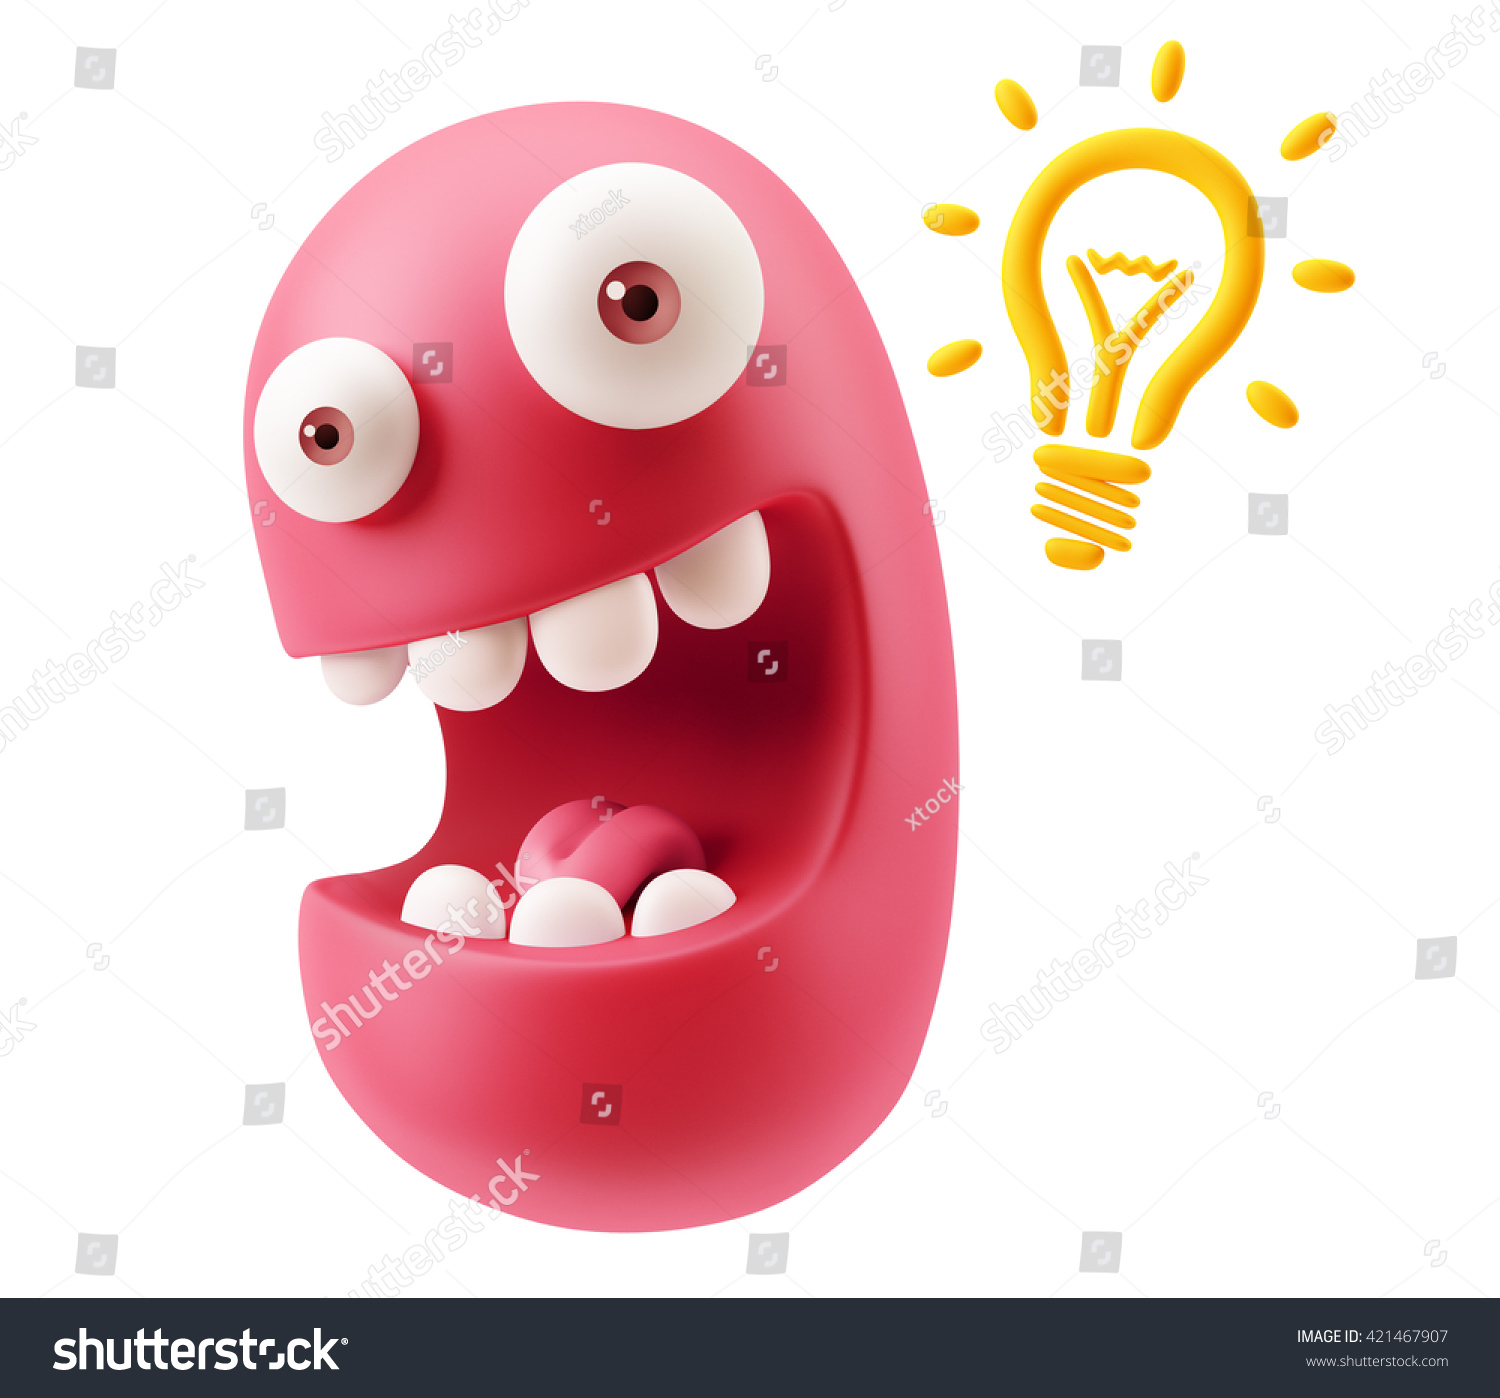 stock-photo-light-bulb-idea-emoji-cartoon-d-rendering-421467907.jpg